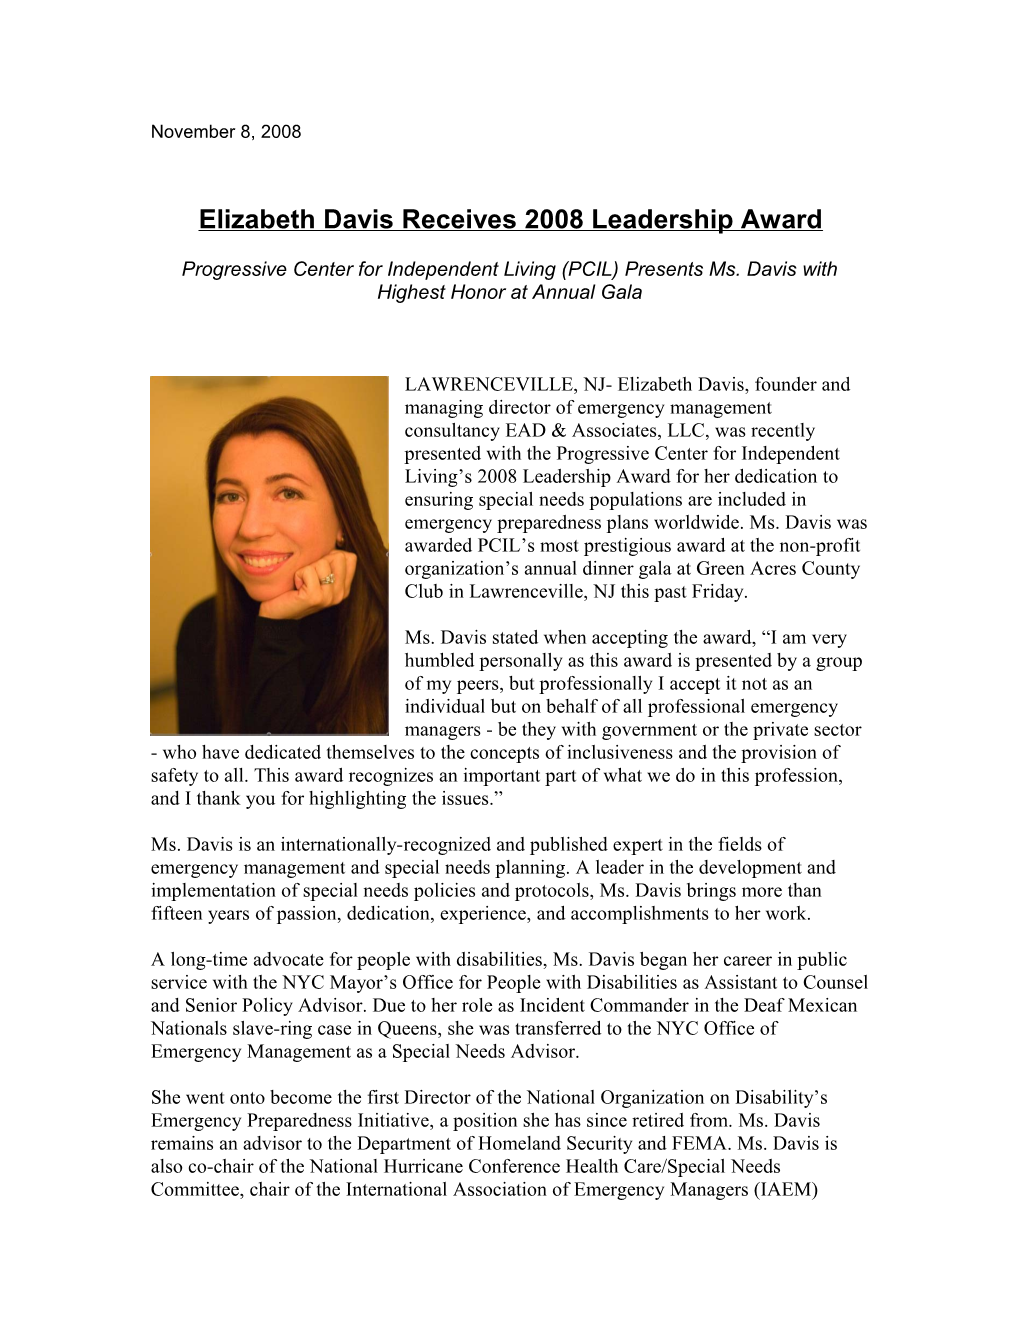 Elizabeth Davis Receives 2008 Leadership Award